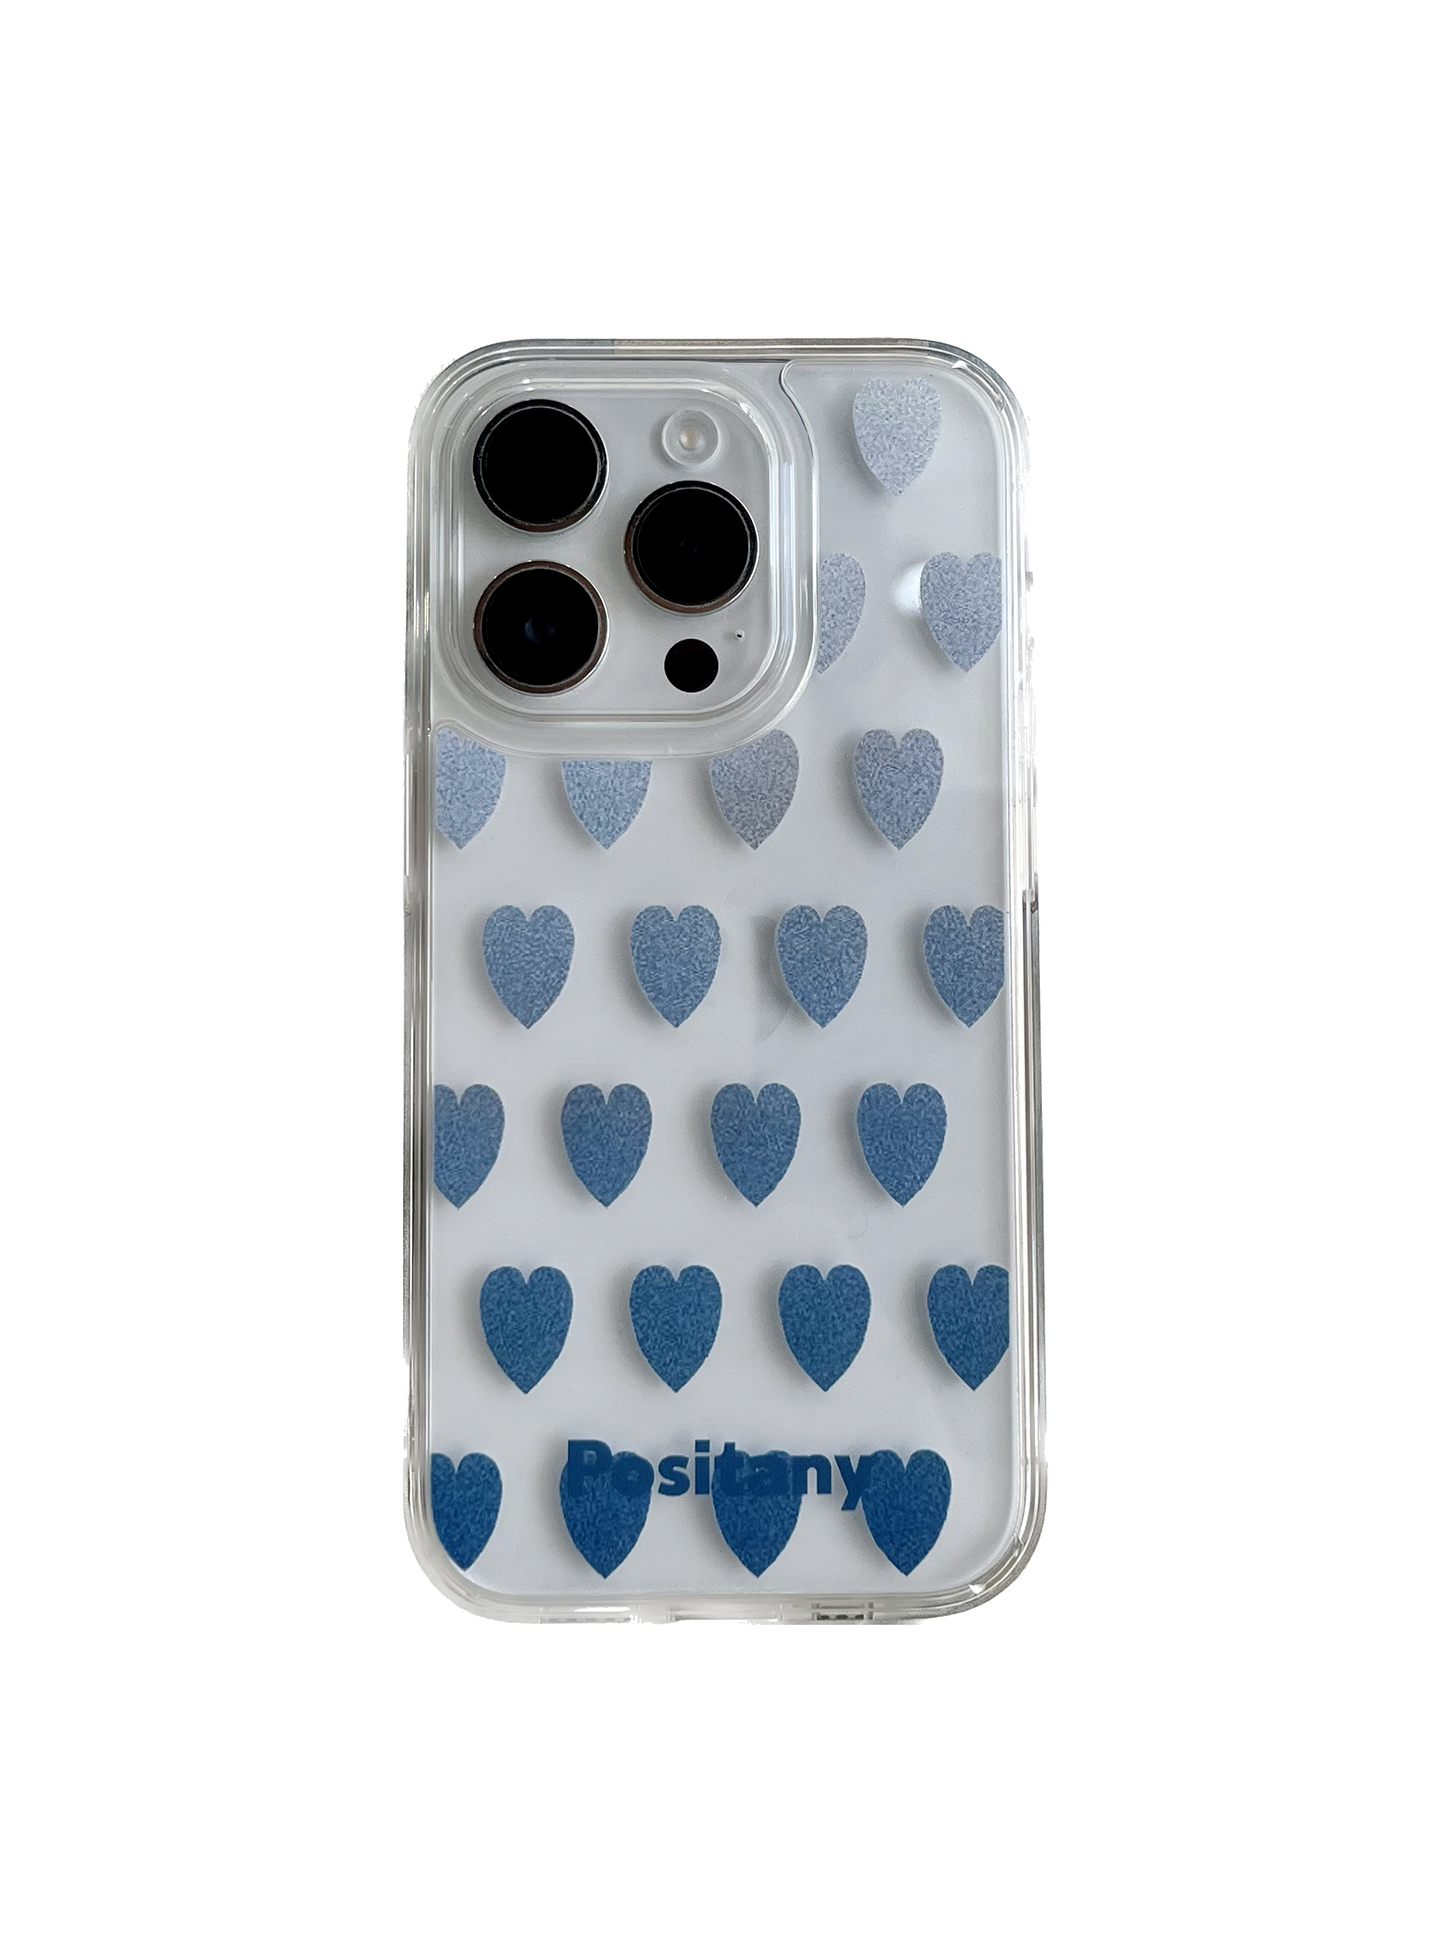 Blue heart phone case